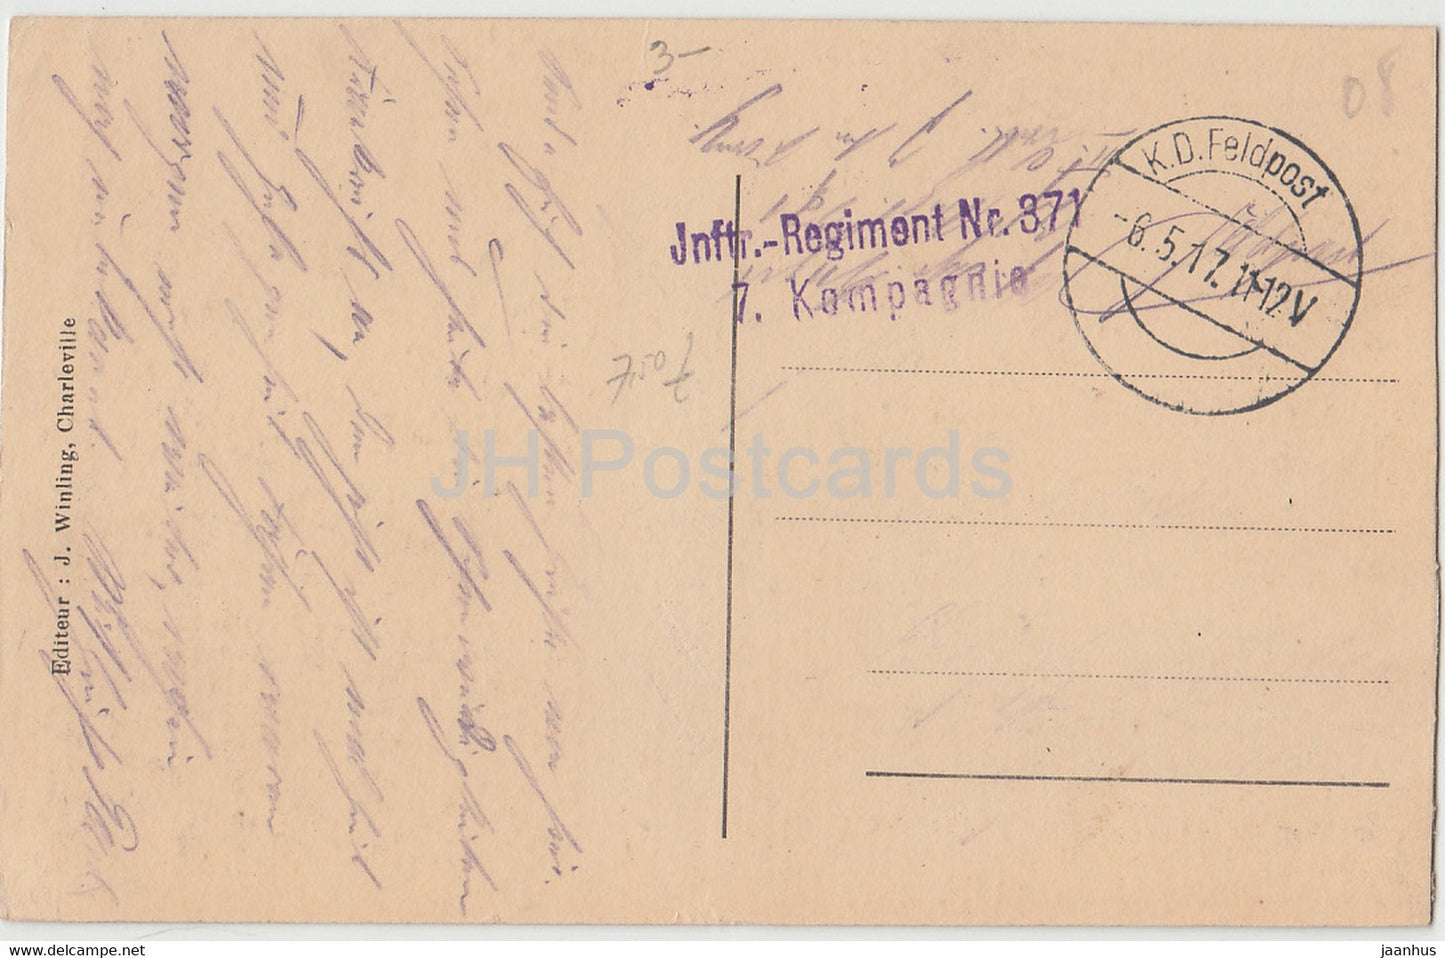 Sedan - La Chene brise - Inftr Regiment Nr 371 7 Kompagnie Feldpost - carte postale ancienne - 1917 - France - occasion